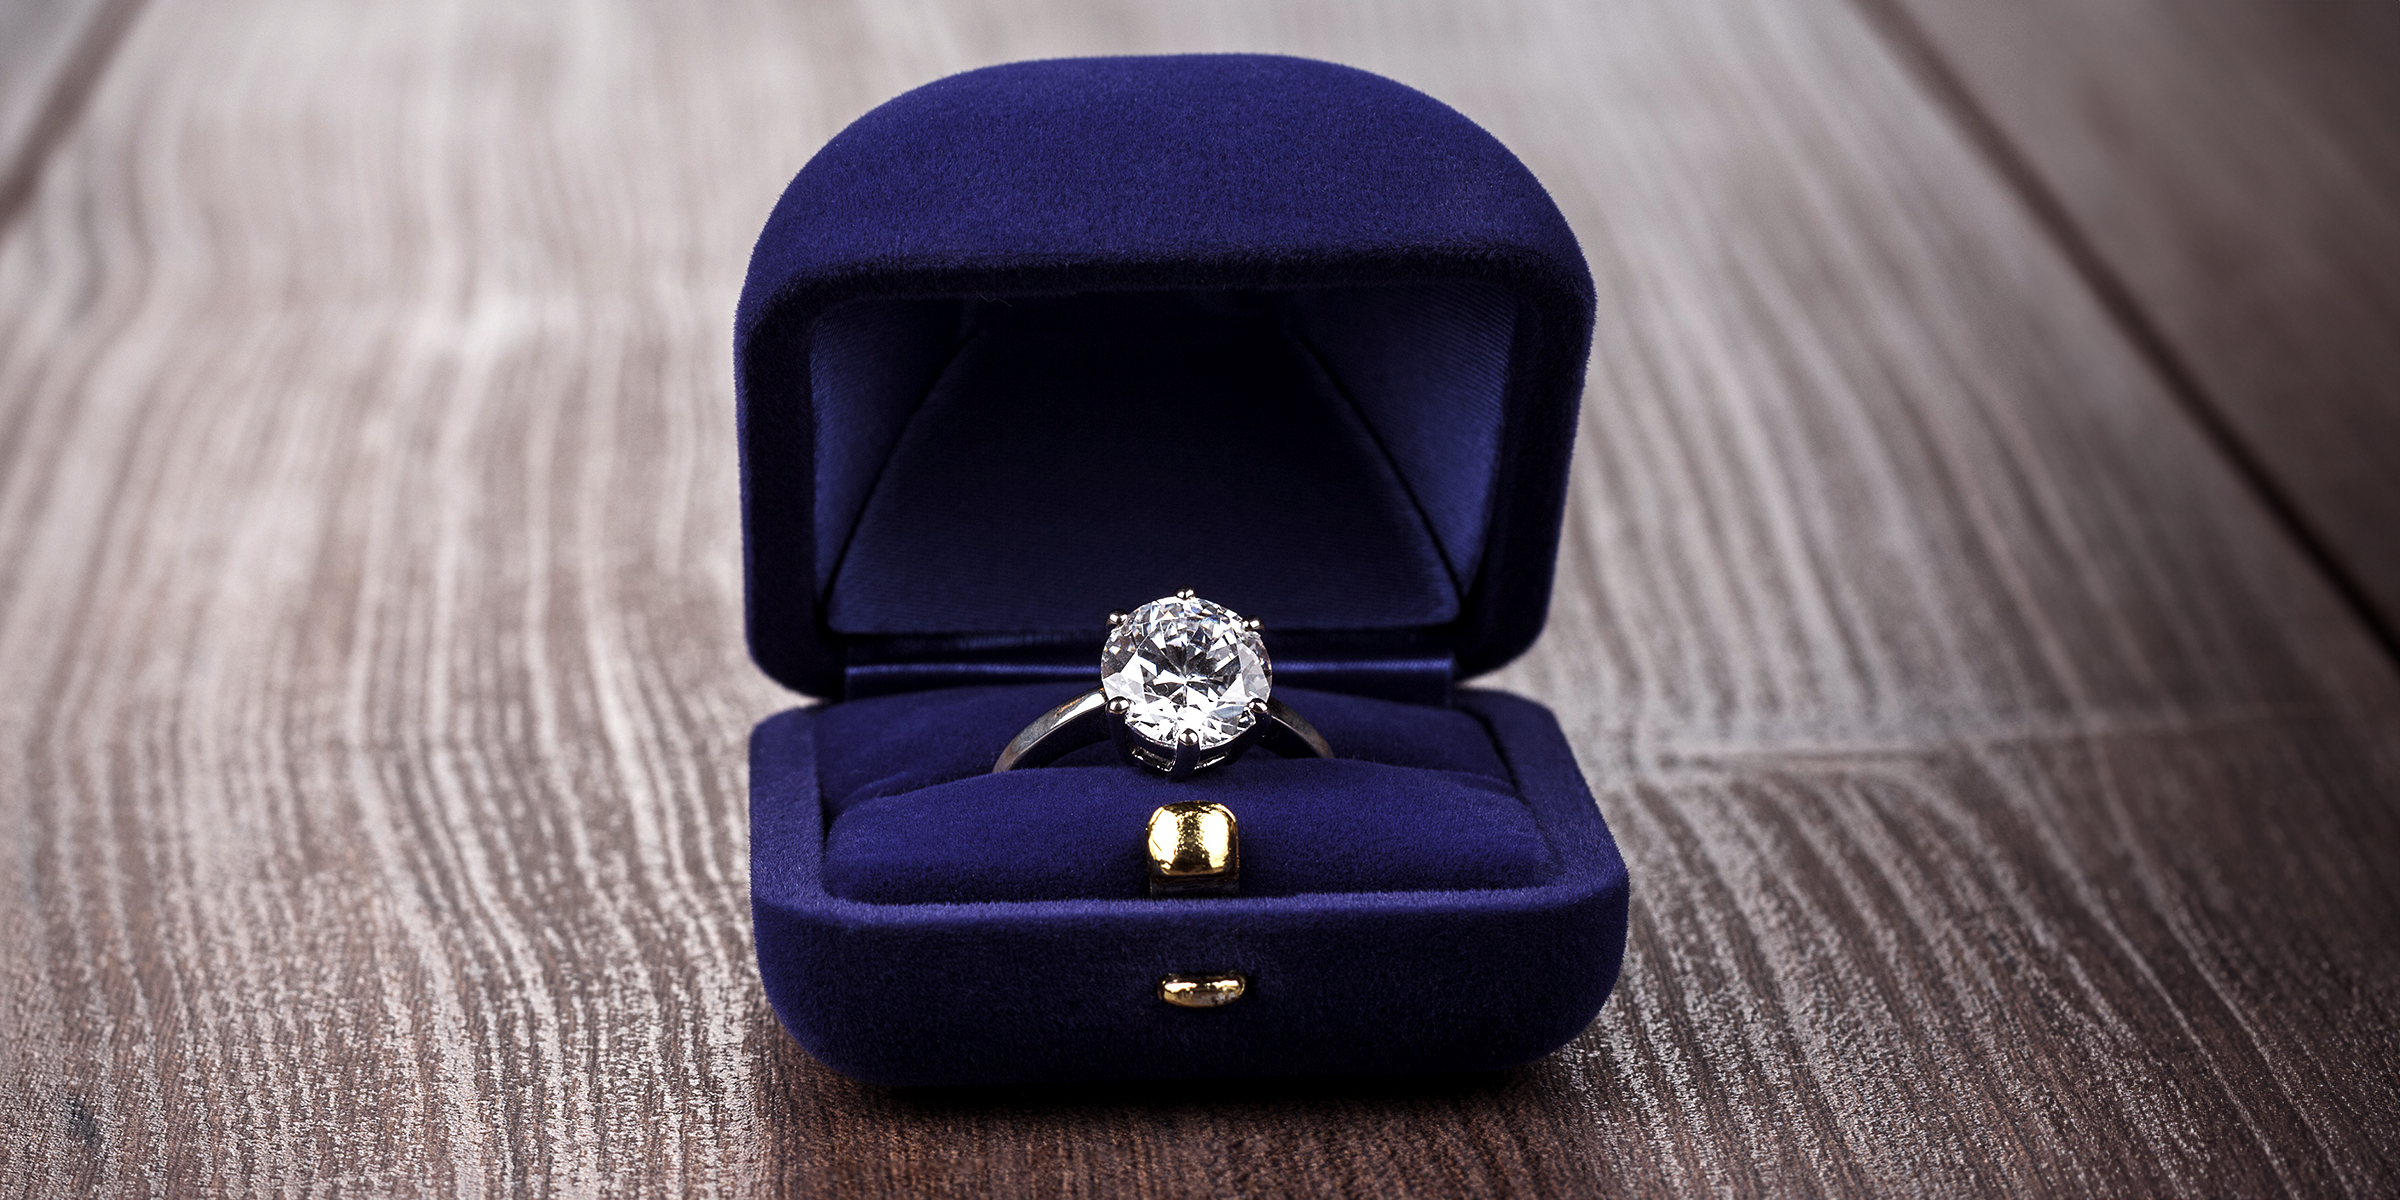 A diamond engagement ring | Source: Shutterstock